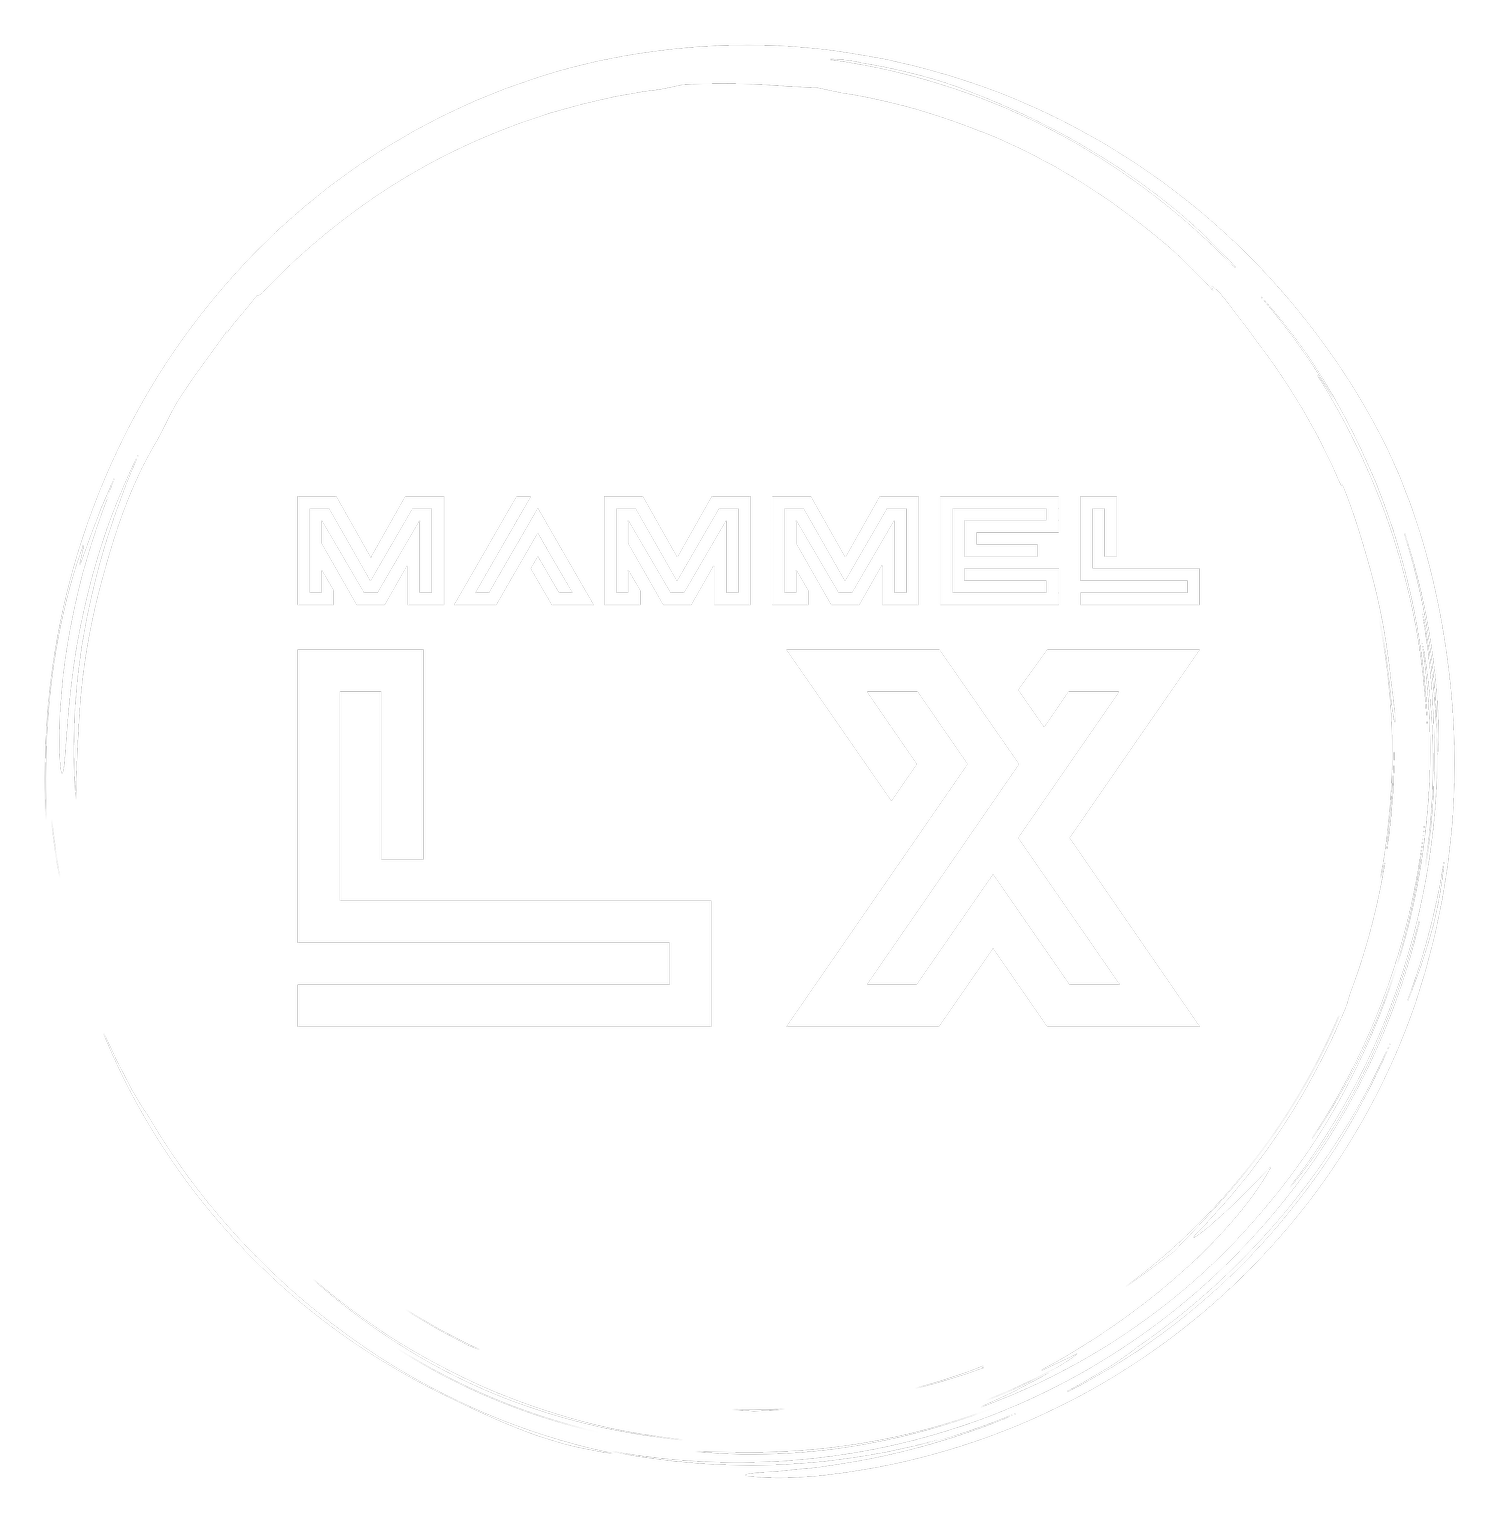 MAMMEL LX LLC